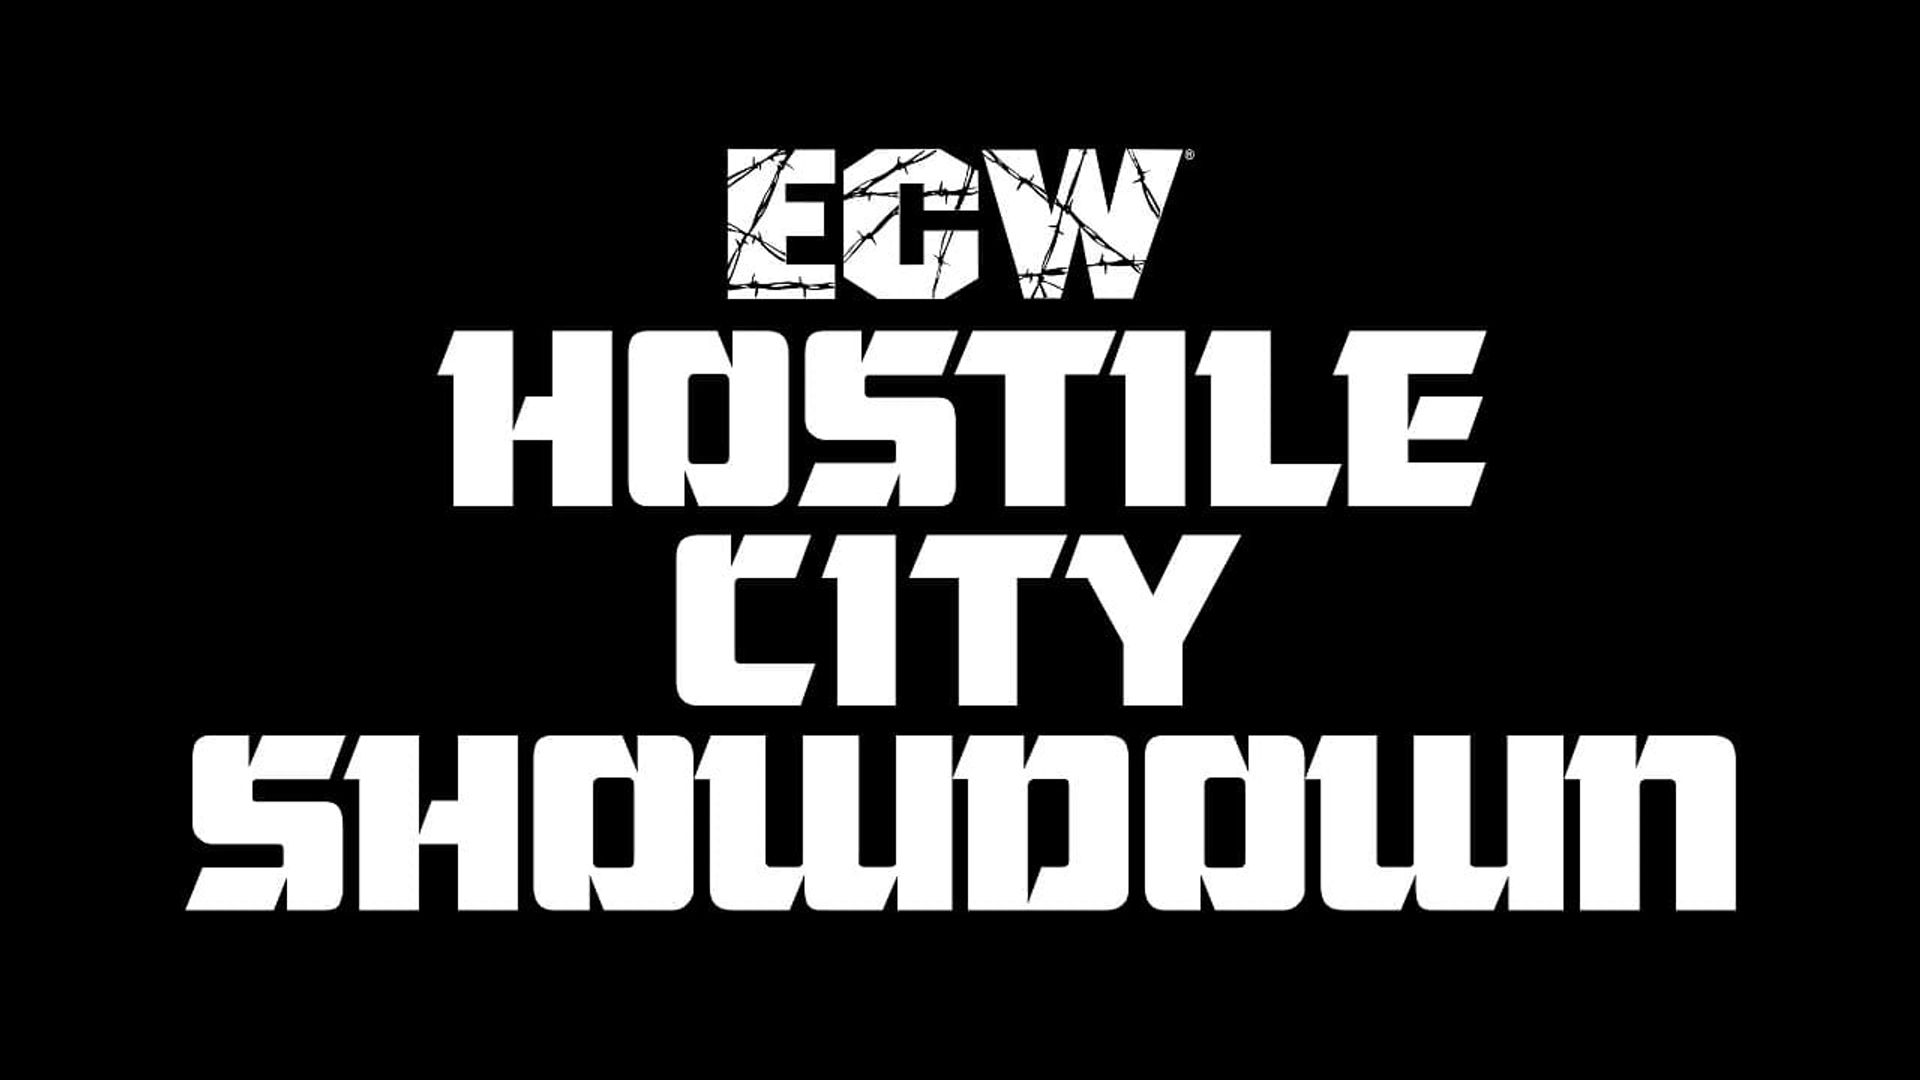 ECW Hostile City Showdown '94 background